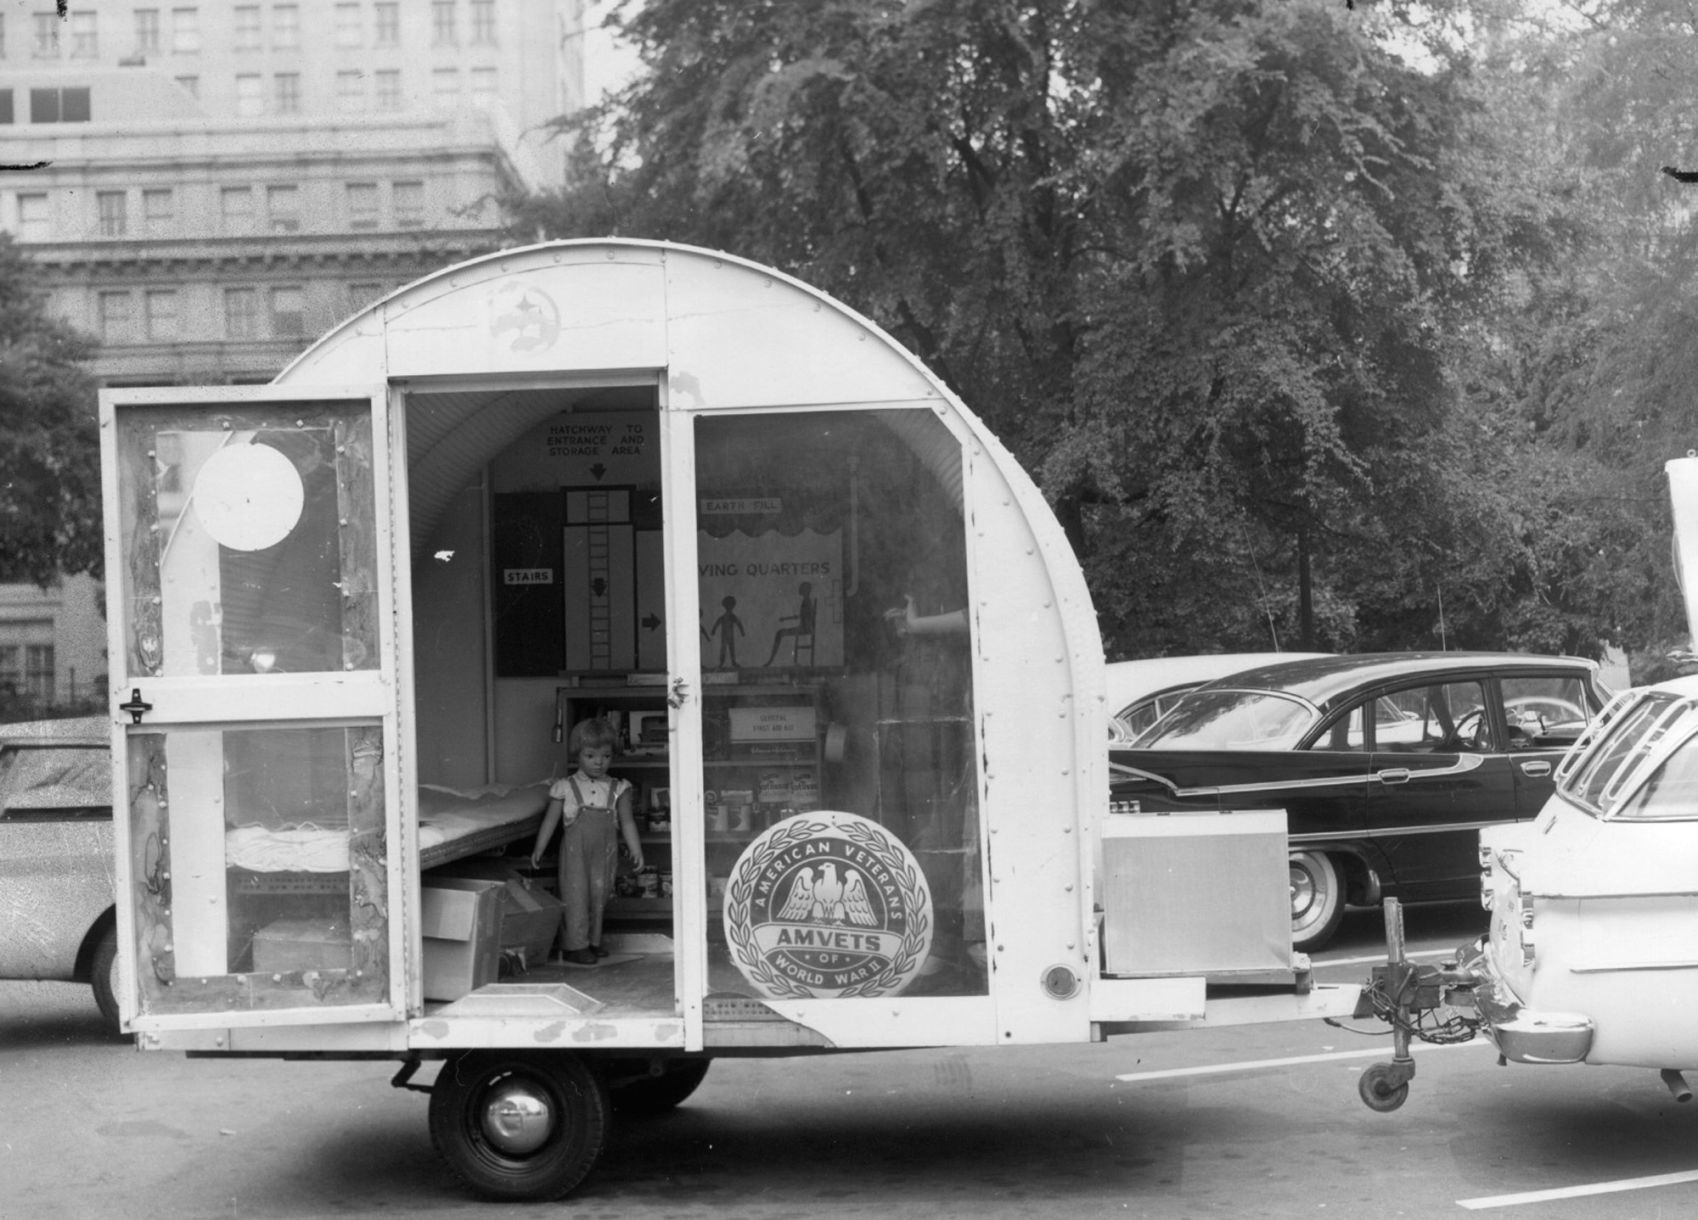 bomb fallout shelter 1960s plans